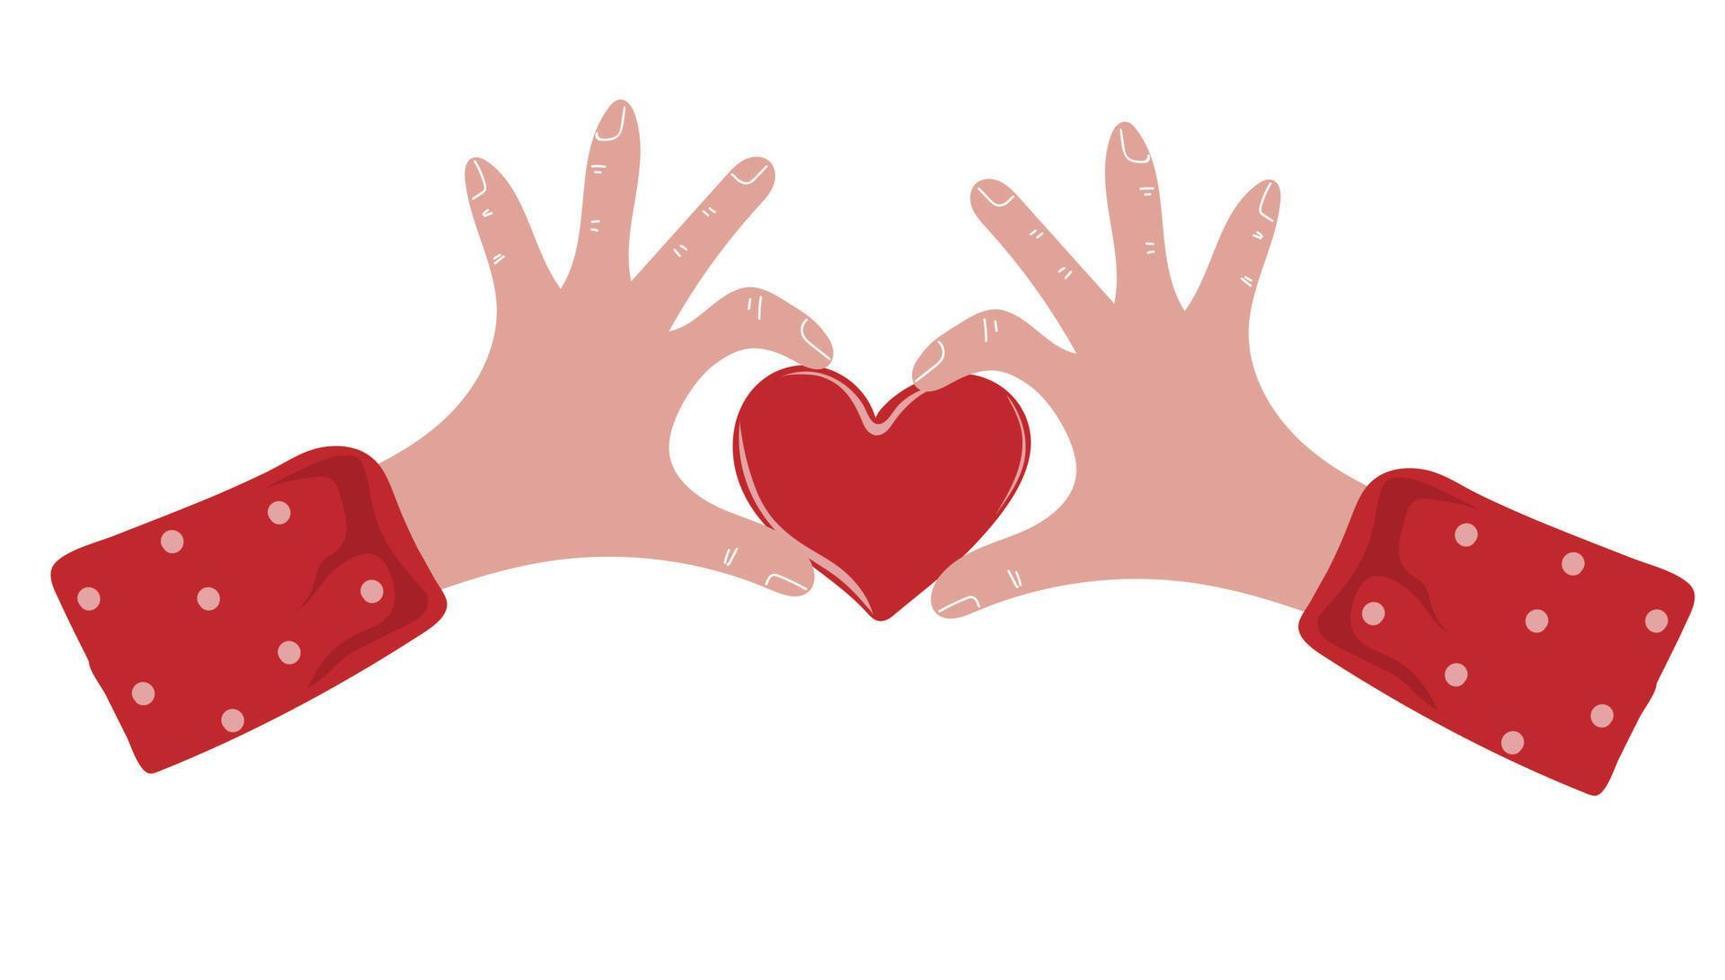 mano dibujado humano manos participación corazón. san valentin día o caridad concepto vector